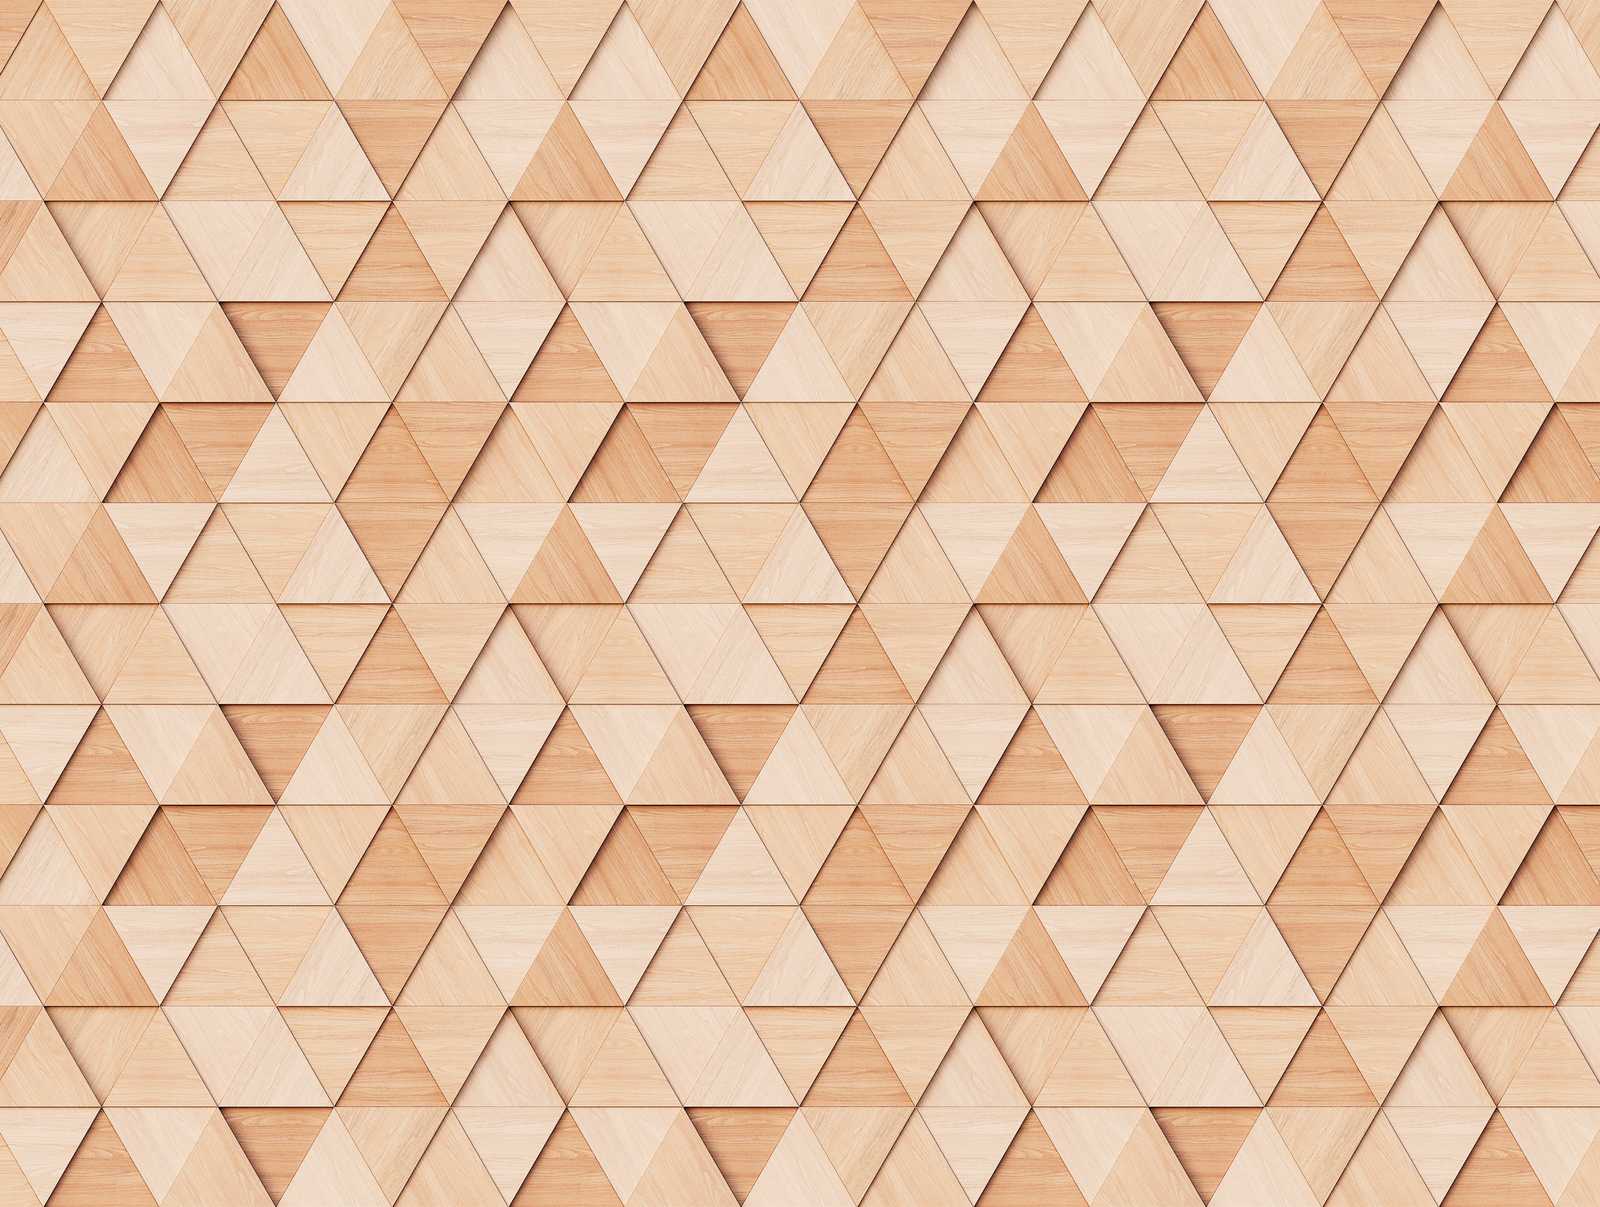             Wallpaper novelty - motif wallpaper wood-look design with 3D triangle pattern
        